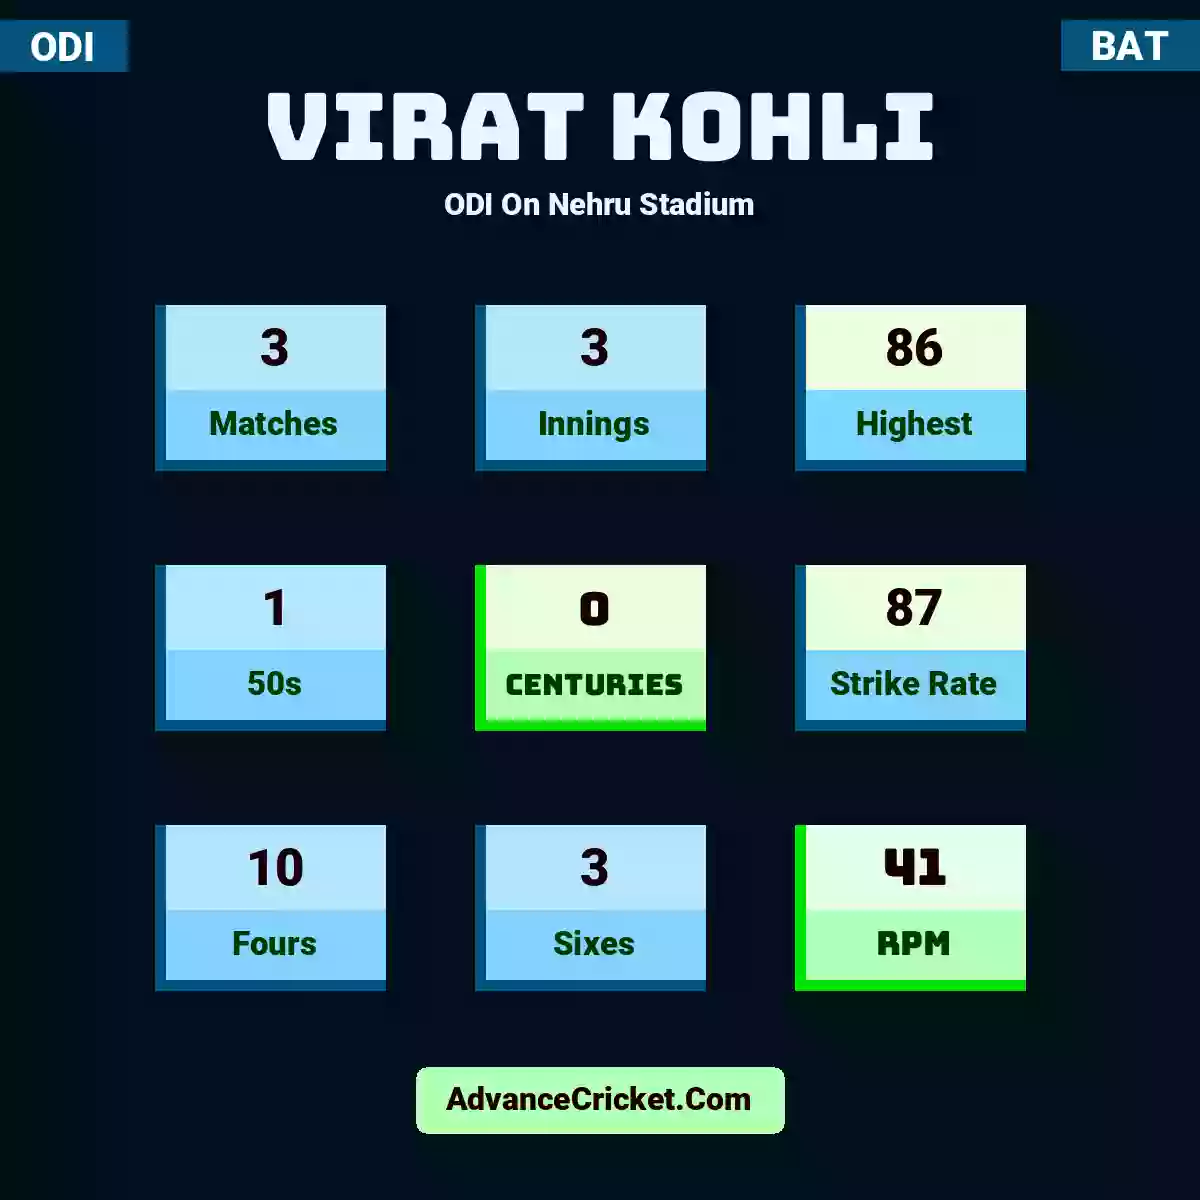 Virat Kohli ODI  On Nehru Stadium, Virat Kohli played 3 matches, scored 86 runs as highest, 1 half-centuries, and 0 centuries, with a strike rate of 87. V.Kohli hit 10 fours and 3 sixes, with an RPM of 41.